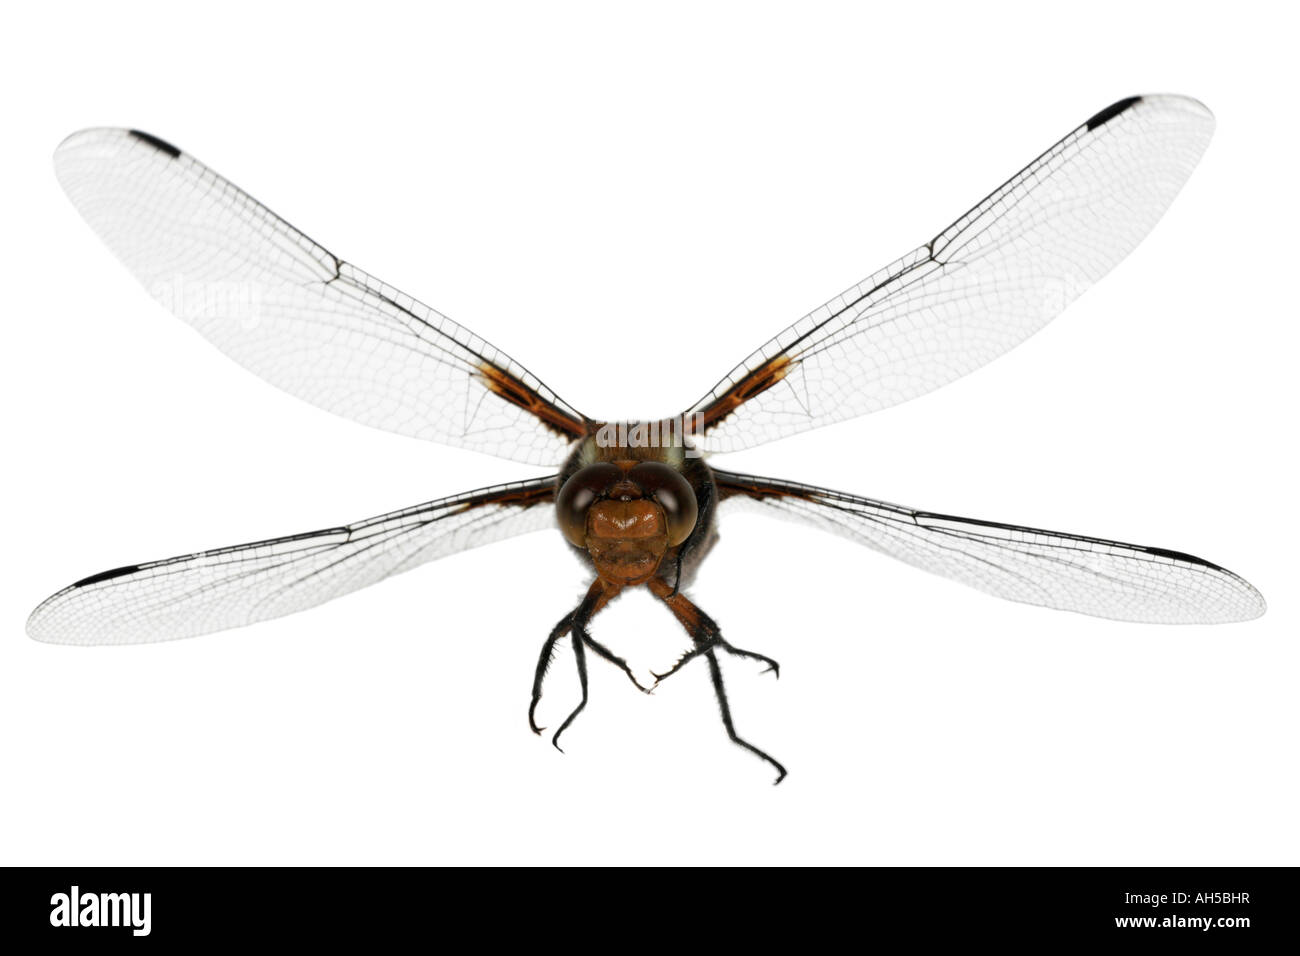 broad-bodied libellula, broad-bodied chaser (Libellula depressa) Stock Photo